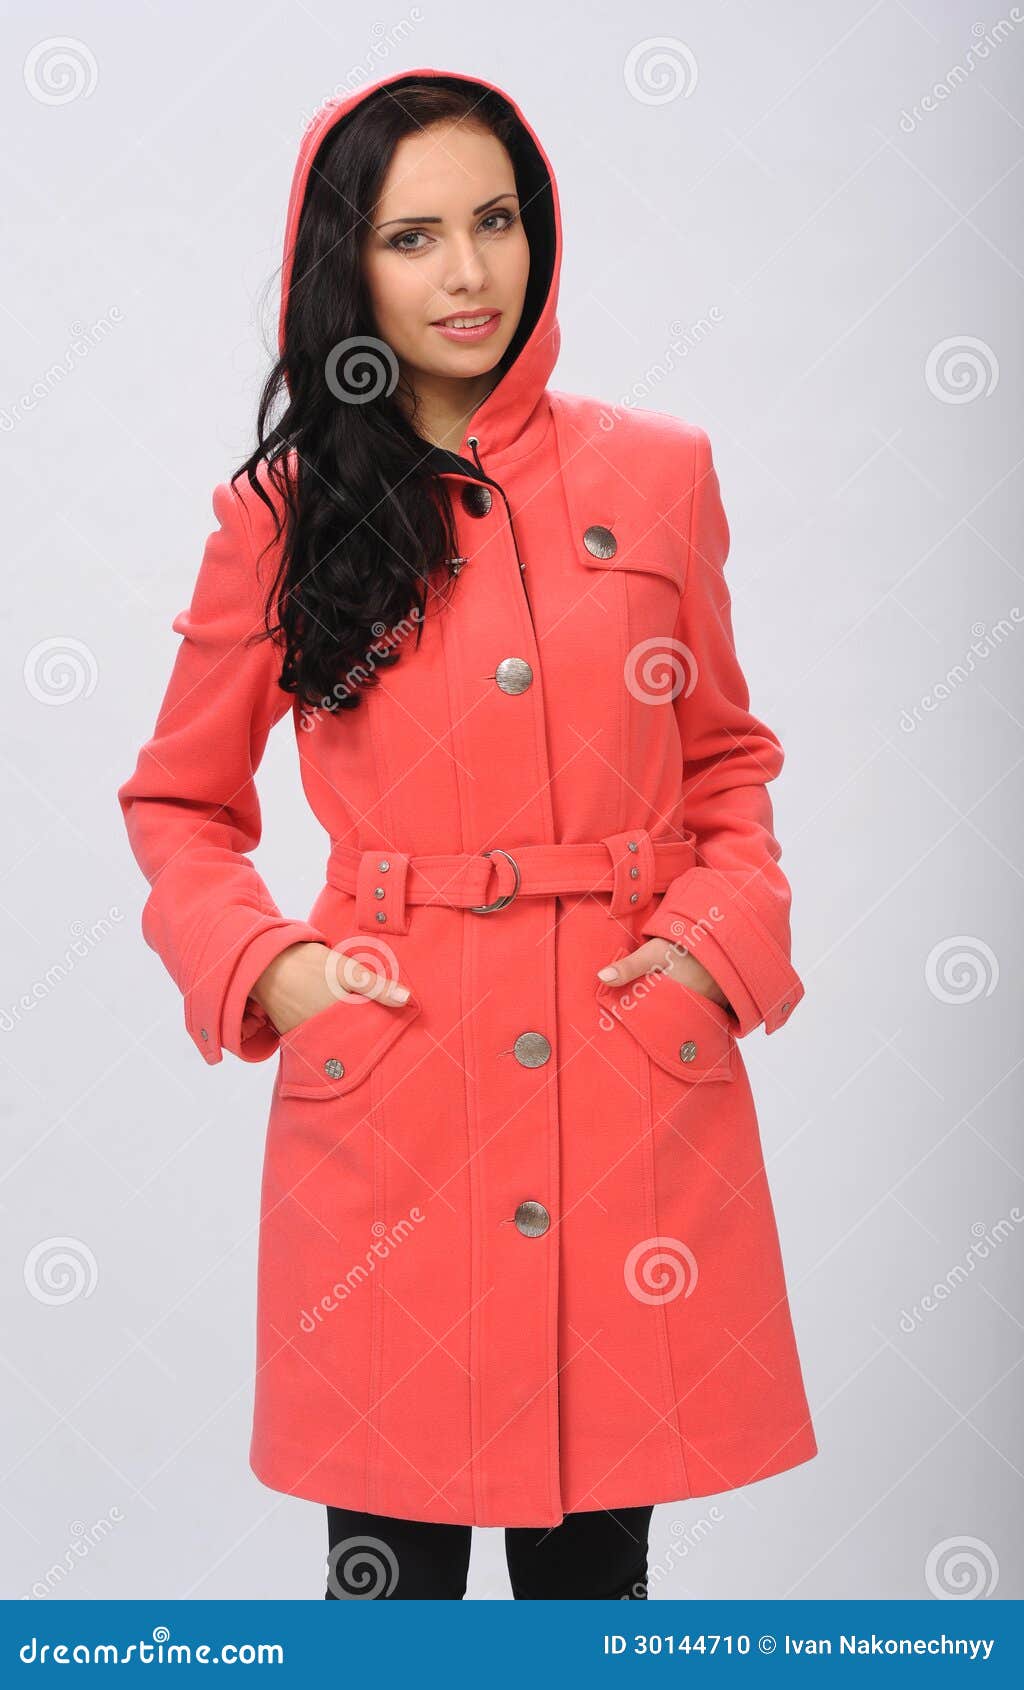 Girl in overcoat stock photo. Image of body, health, clothing - 30144710